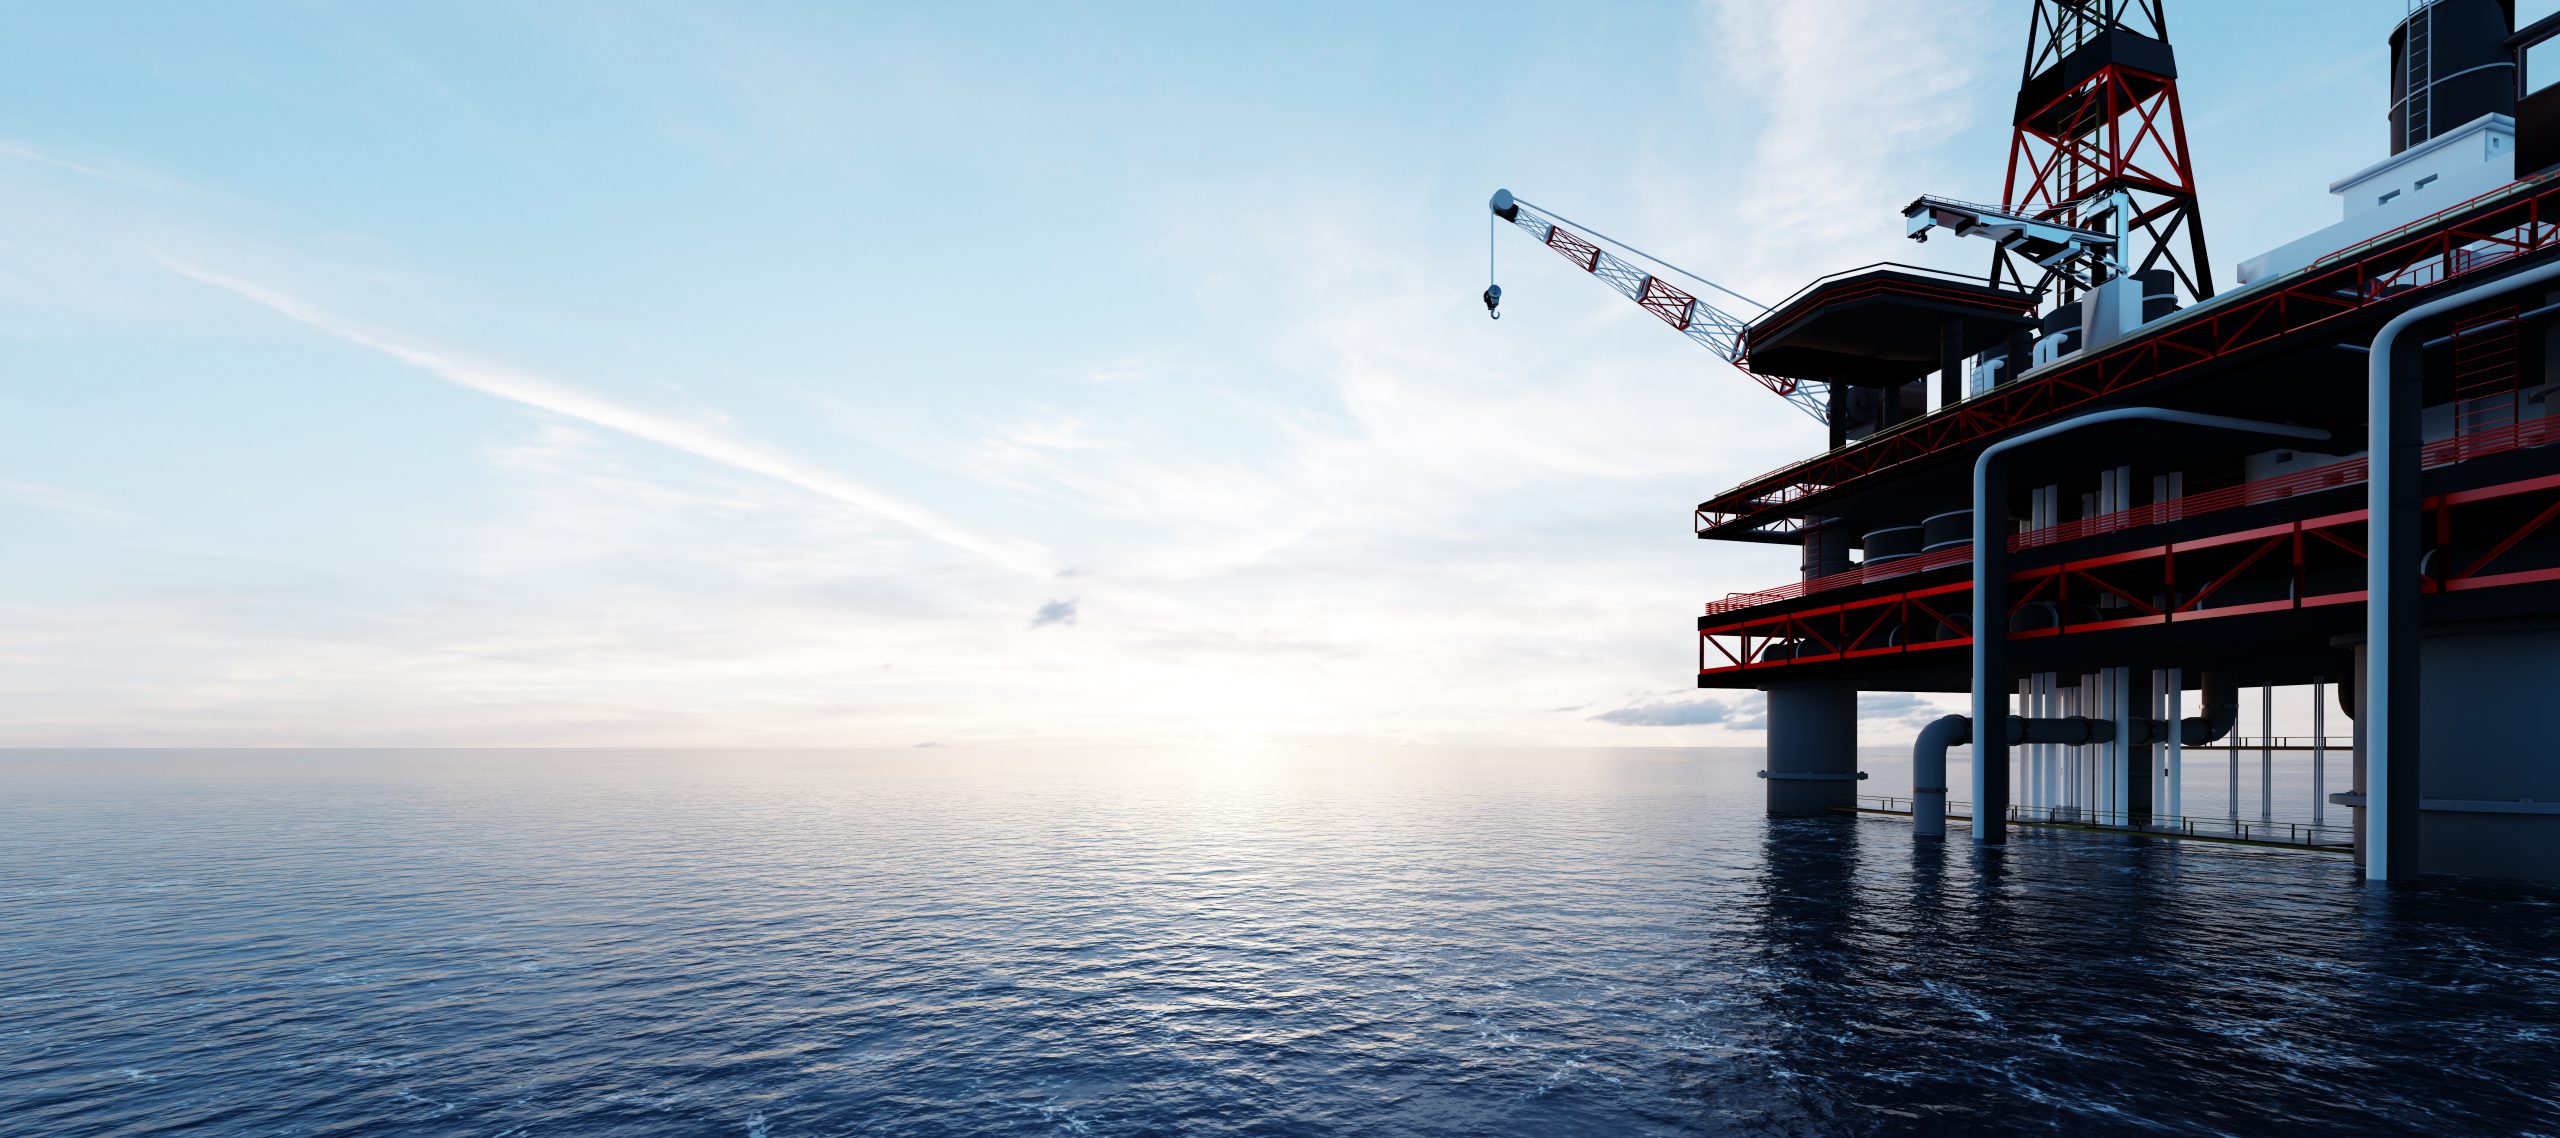 oil platform on the ocean offshore drilling